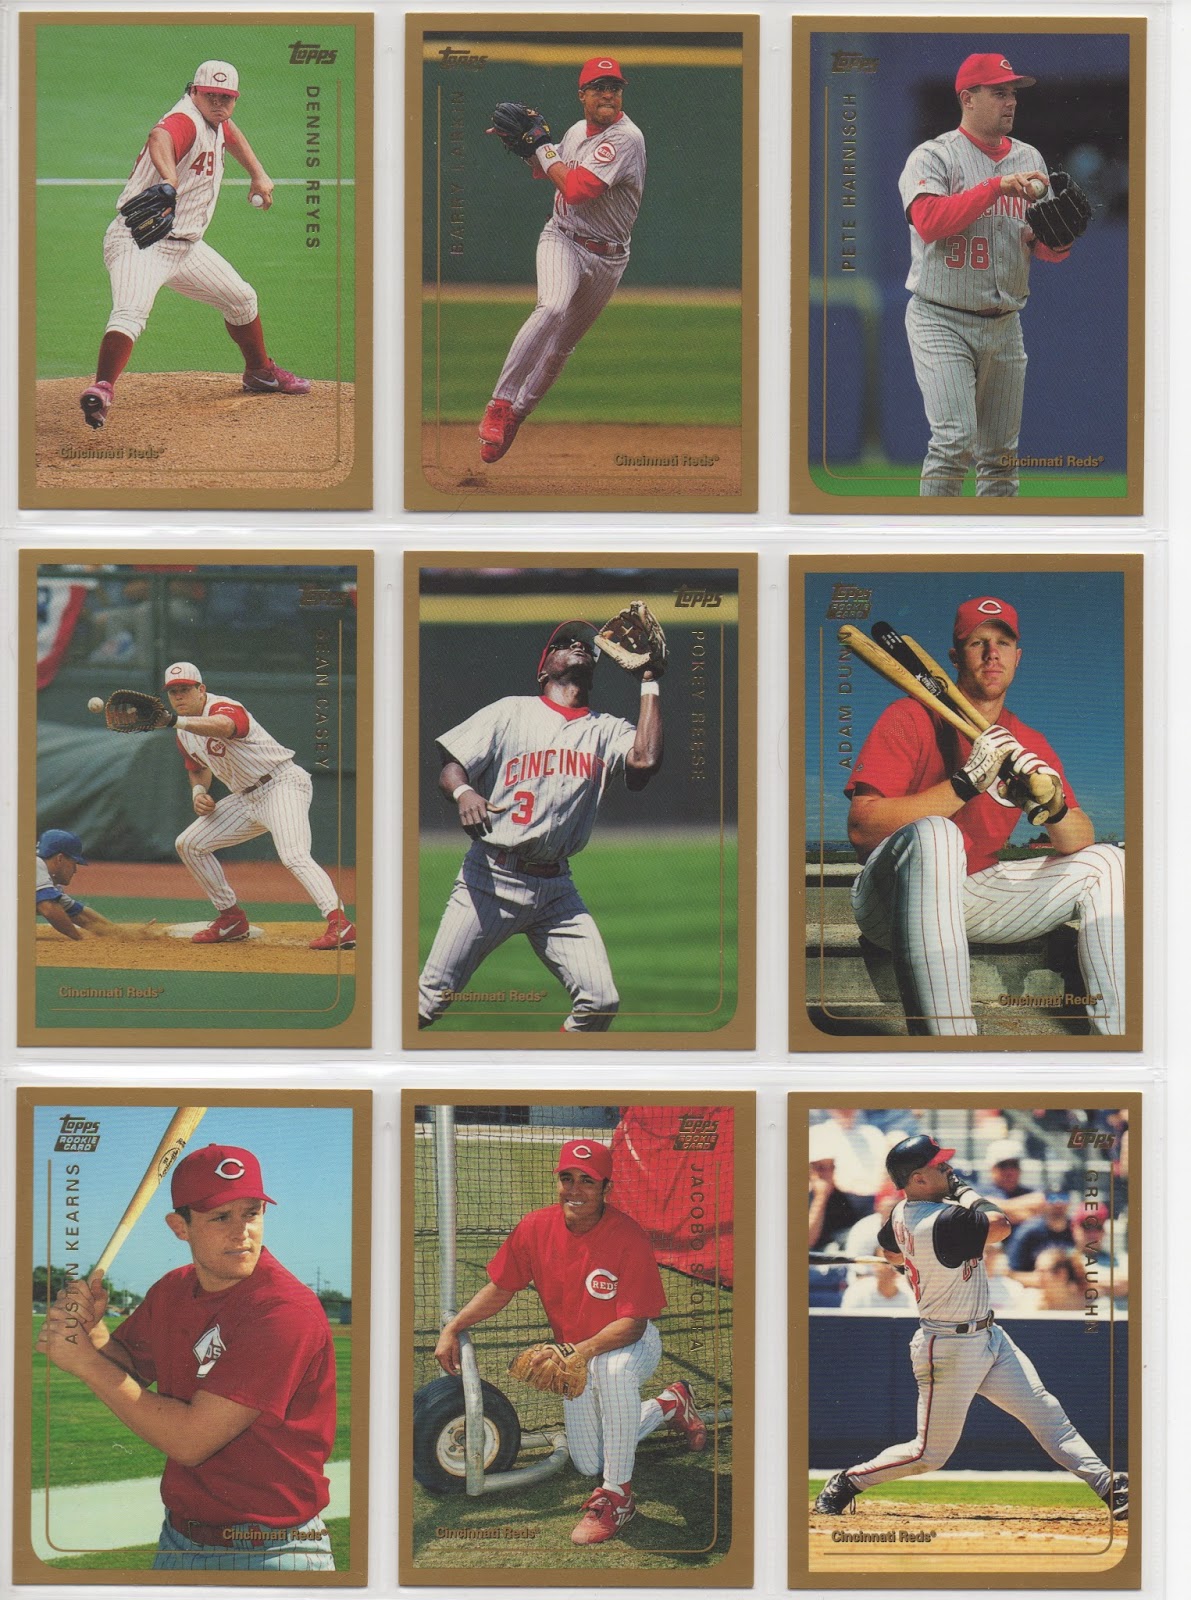 Cincinnati Reds Baseball Card Collector: 1999 Topps Cincinnati Reds Team Set